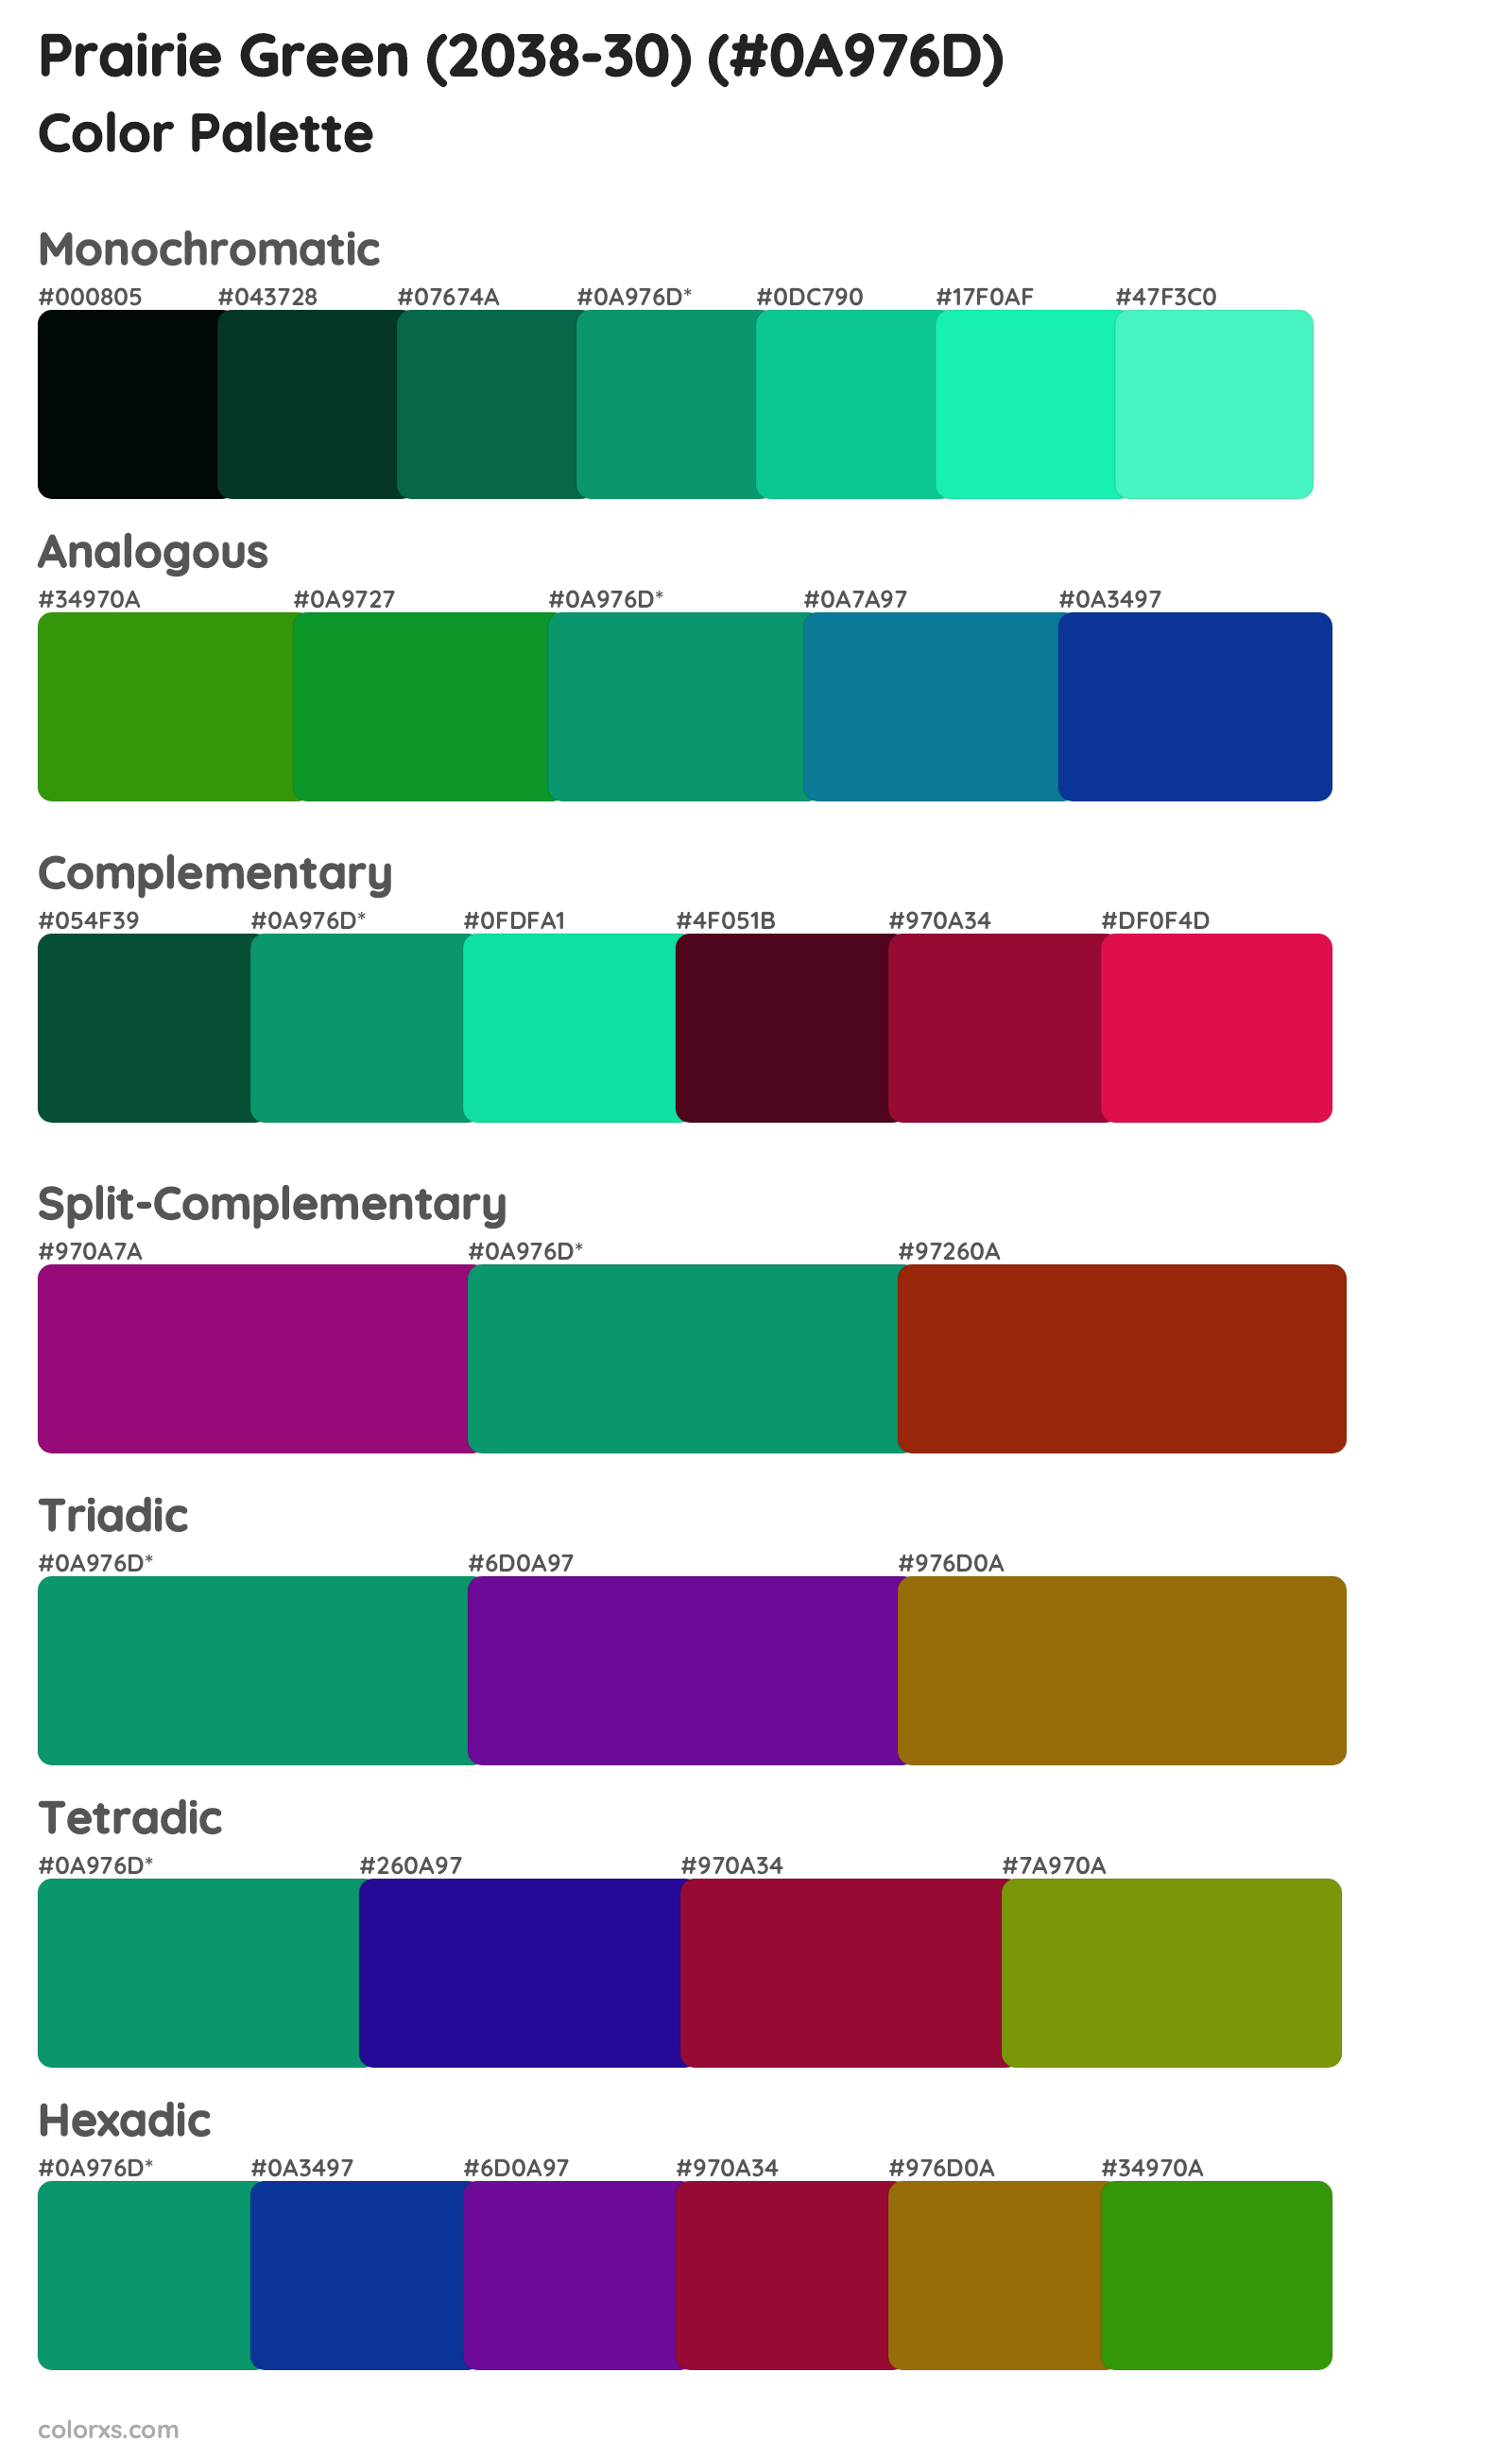 Prairie Green (2038-30) Color Scheme Palettes